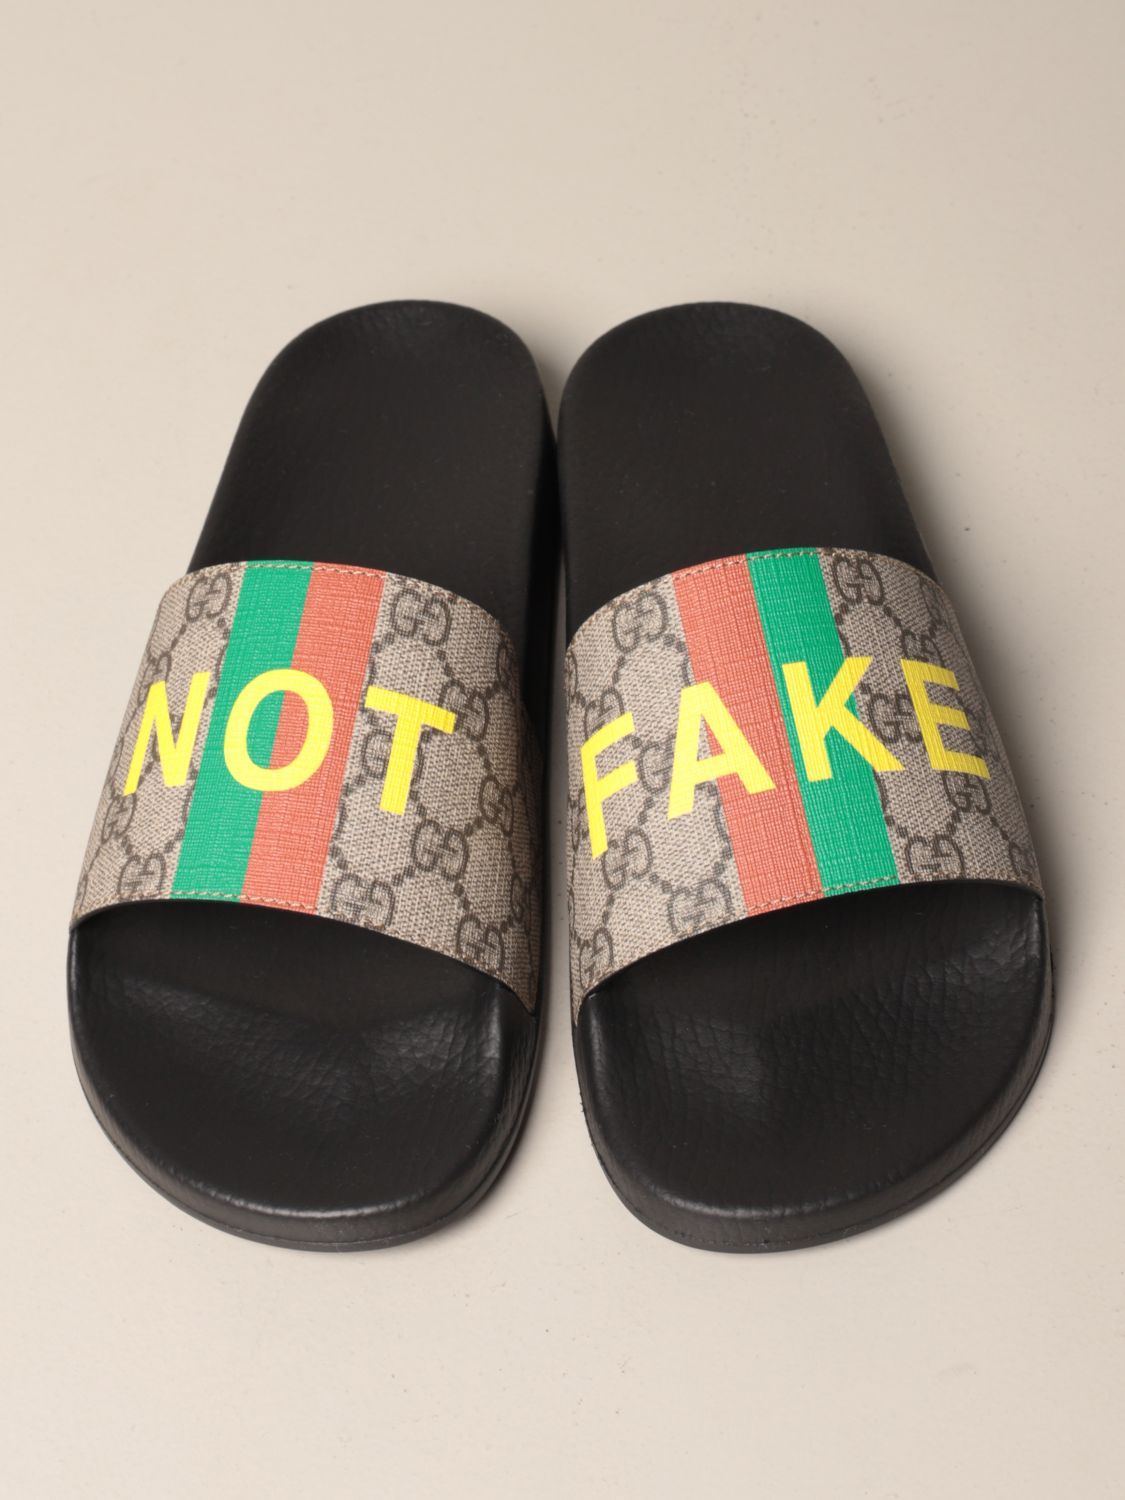 til stede Displacement Rose GUCCI: Pursuit slipper sandal with not fake print | Sandals Gucci Men Beige  | Sandals Gucci 636344 2GC00 GIGLIO.COM